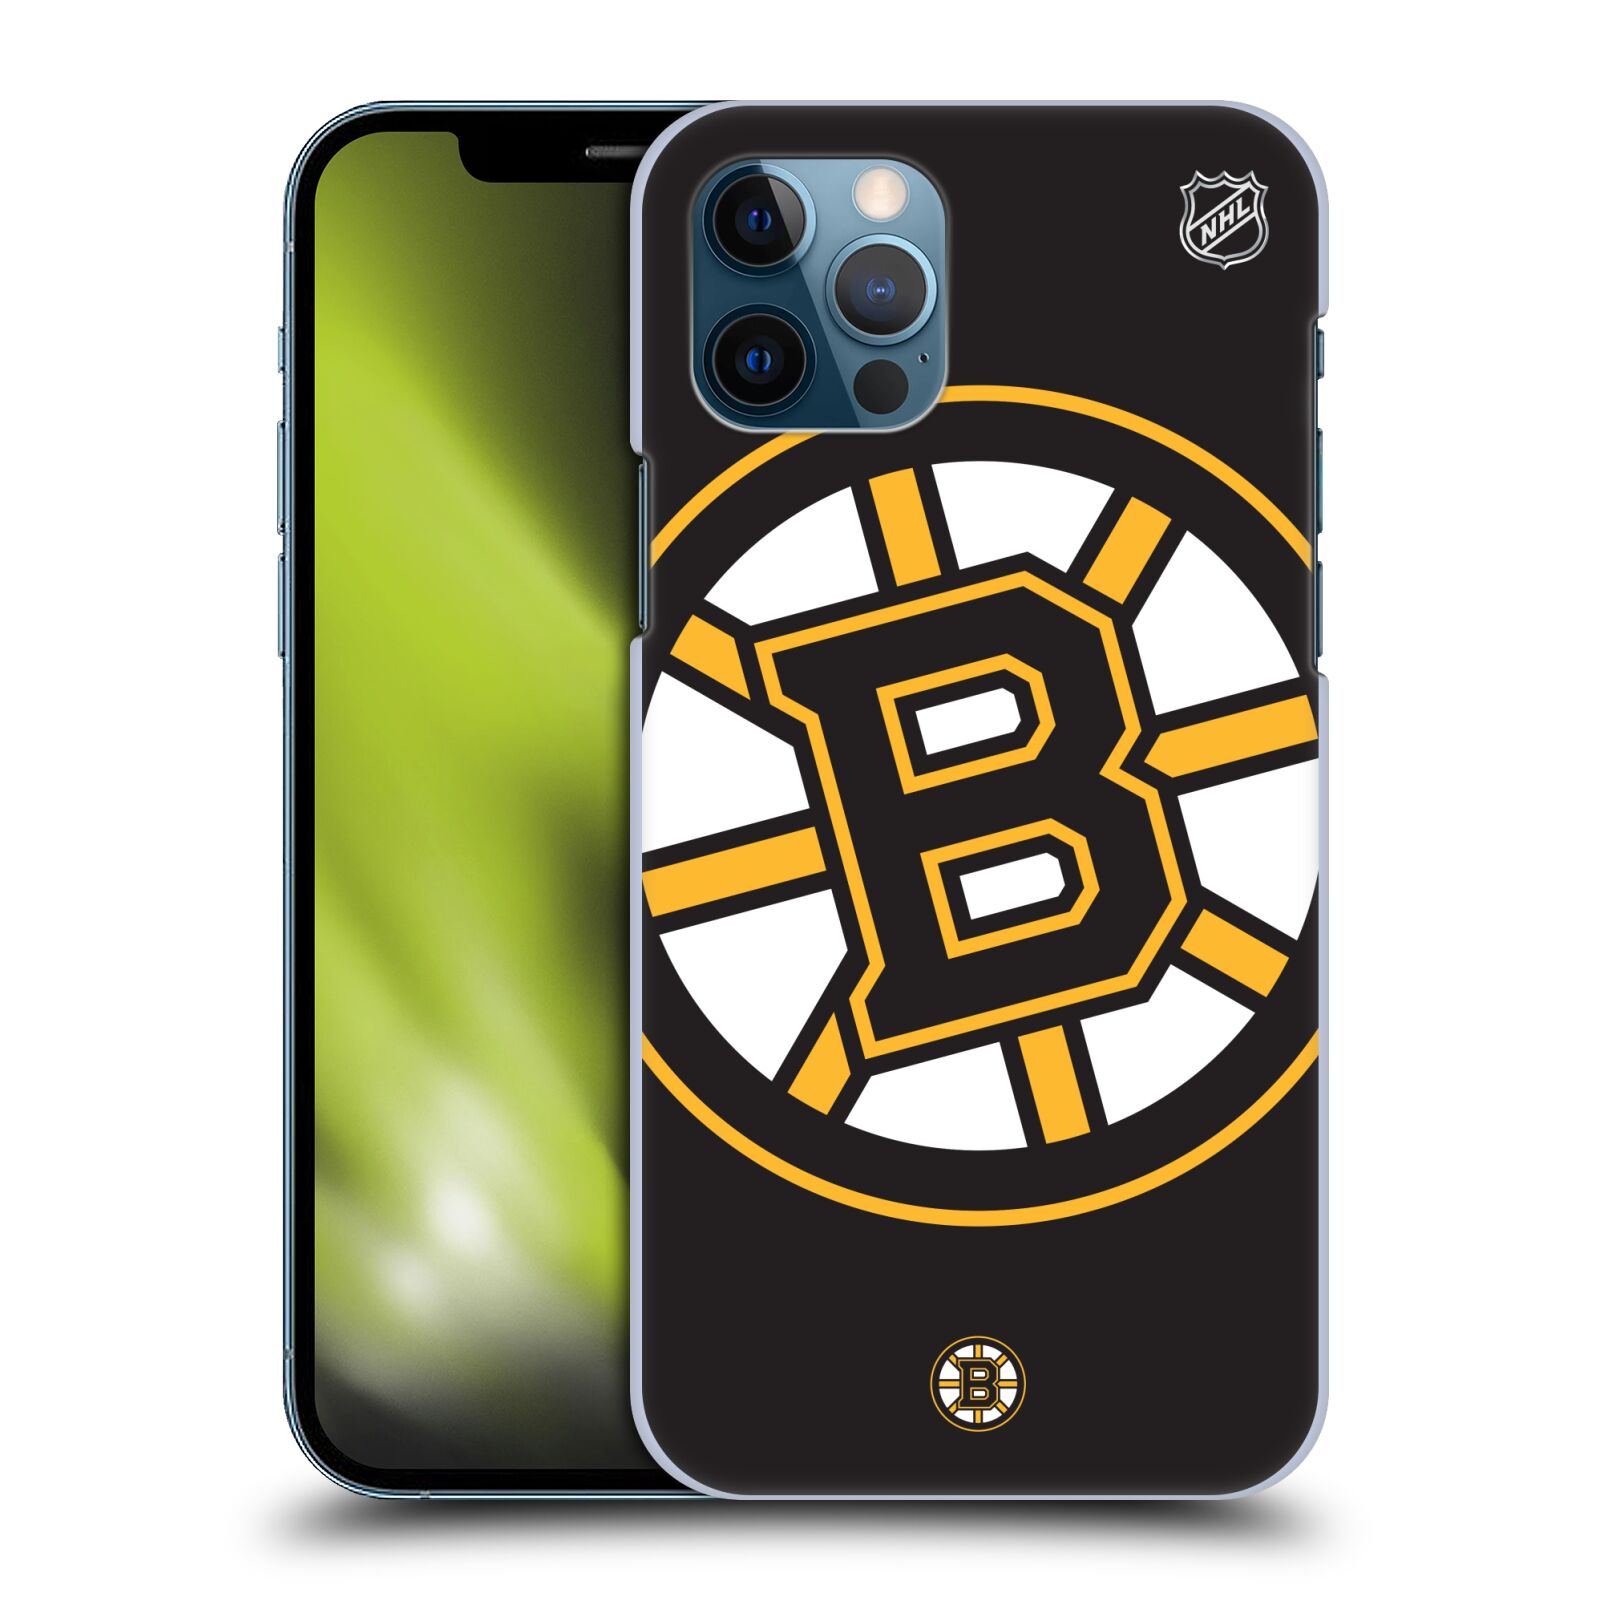 Pouzdro na mobil Apple Iphone 12 / 12 PRO - HEAD CASE - Hokej NHL - Boston Bruins - velký znak